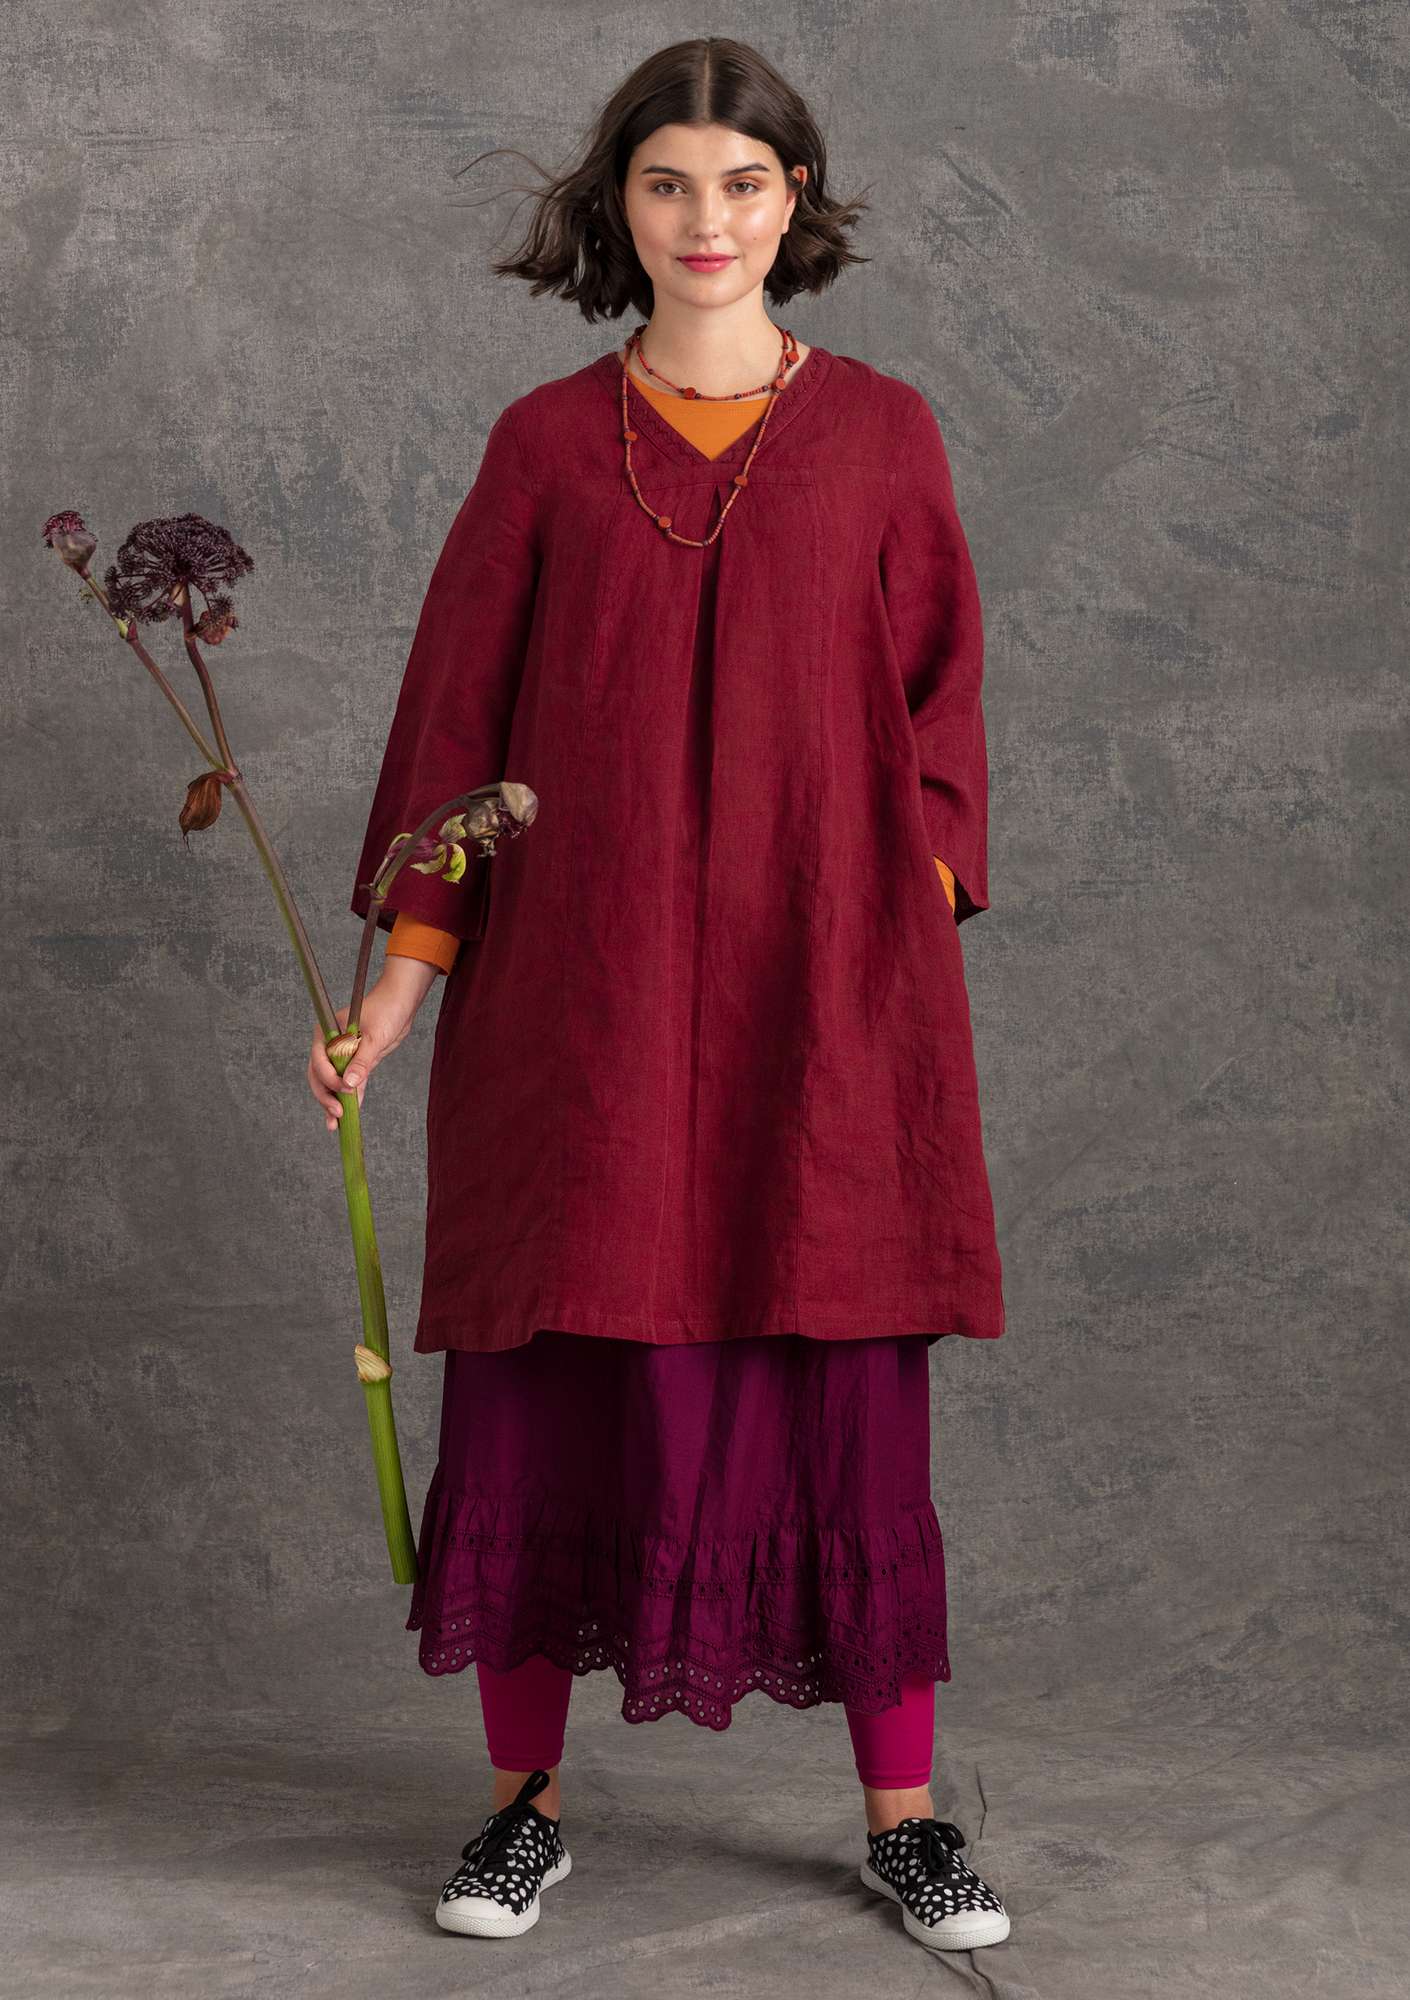 Woven linen dress purple red